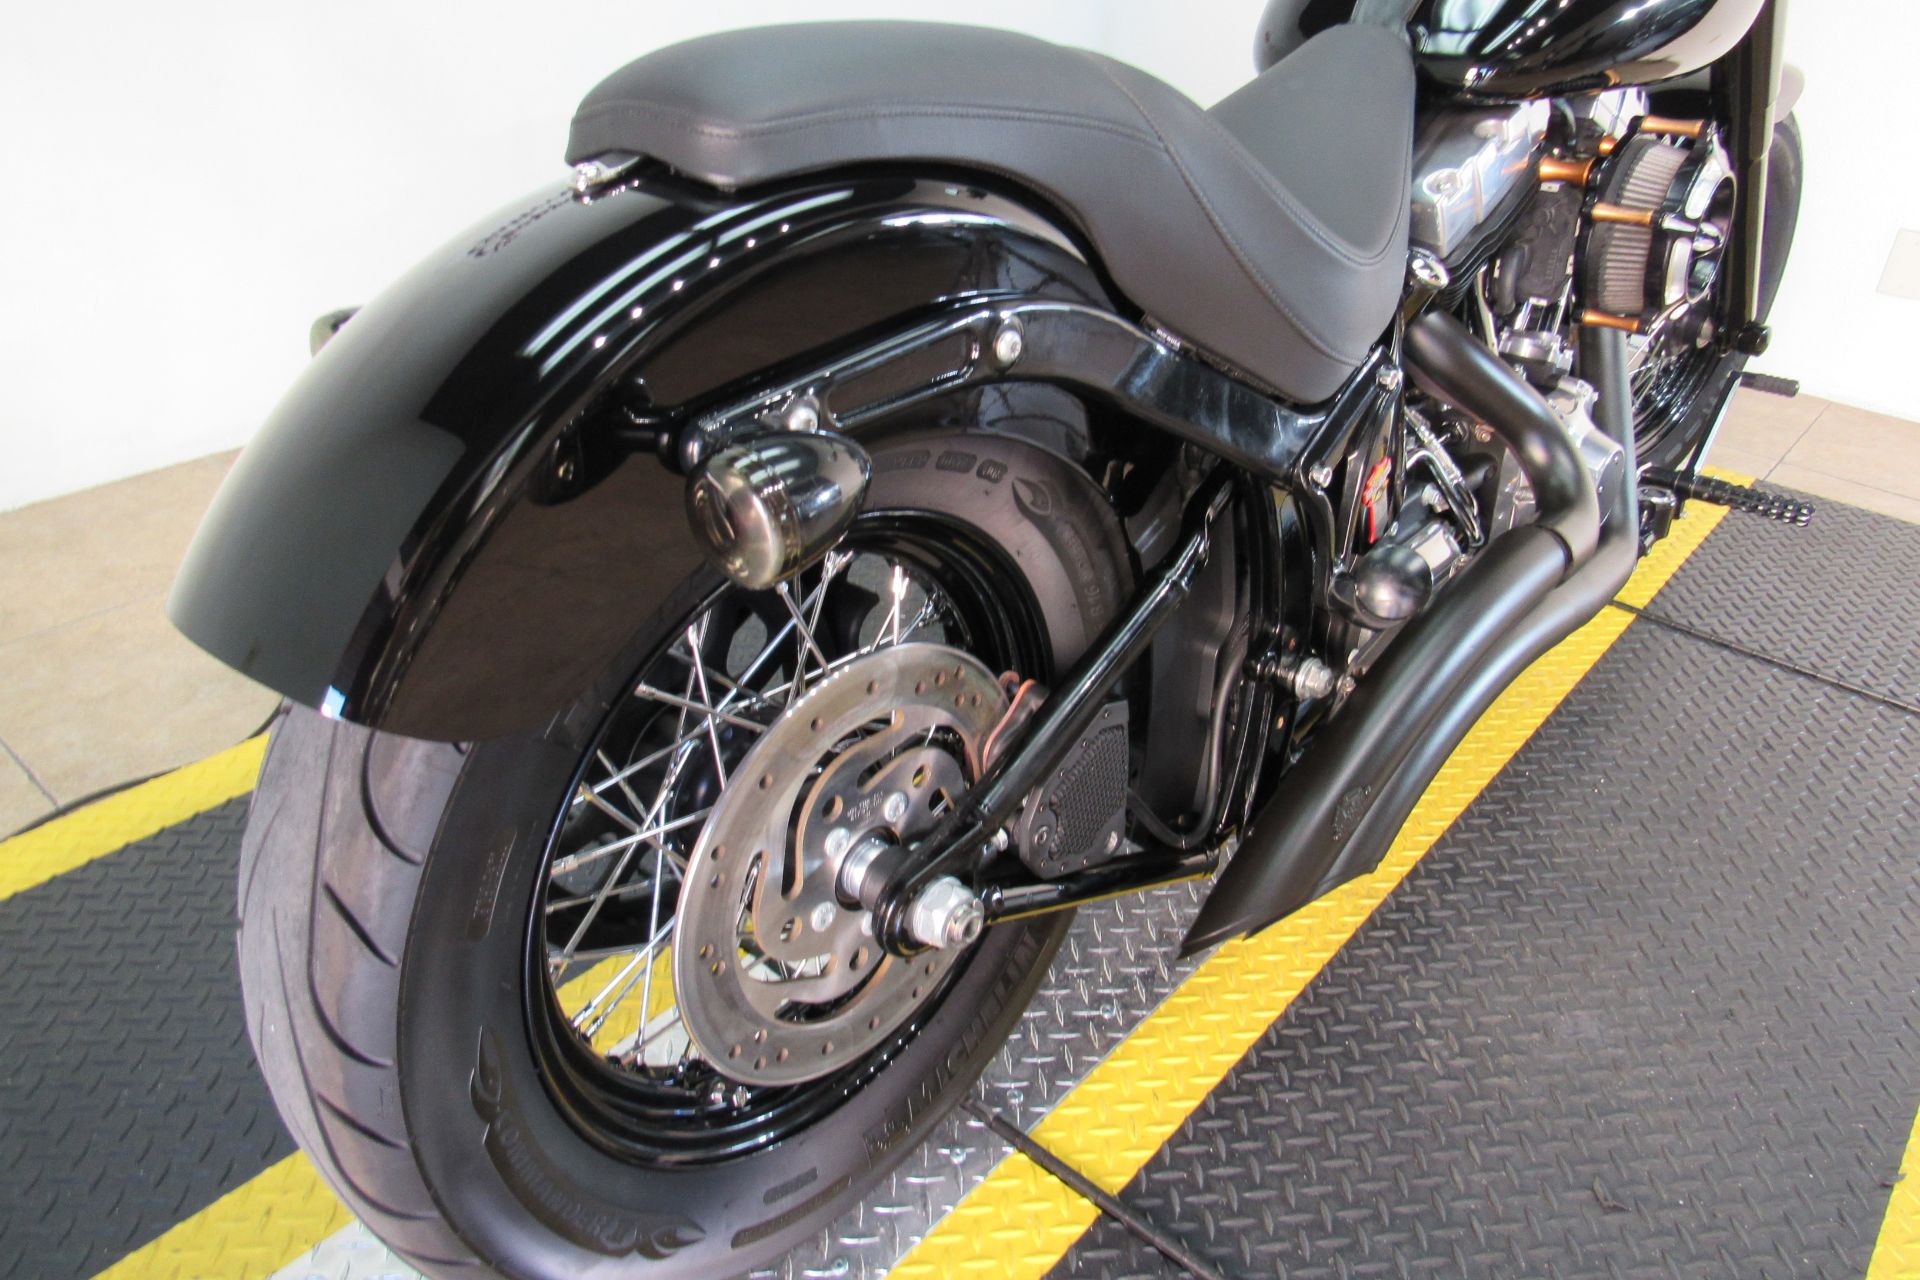 2016 Harley-Davidson Softail Slim® in Temecula, California - Photo 33